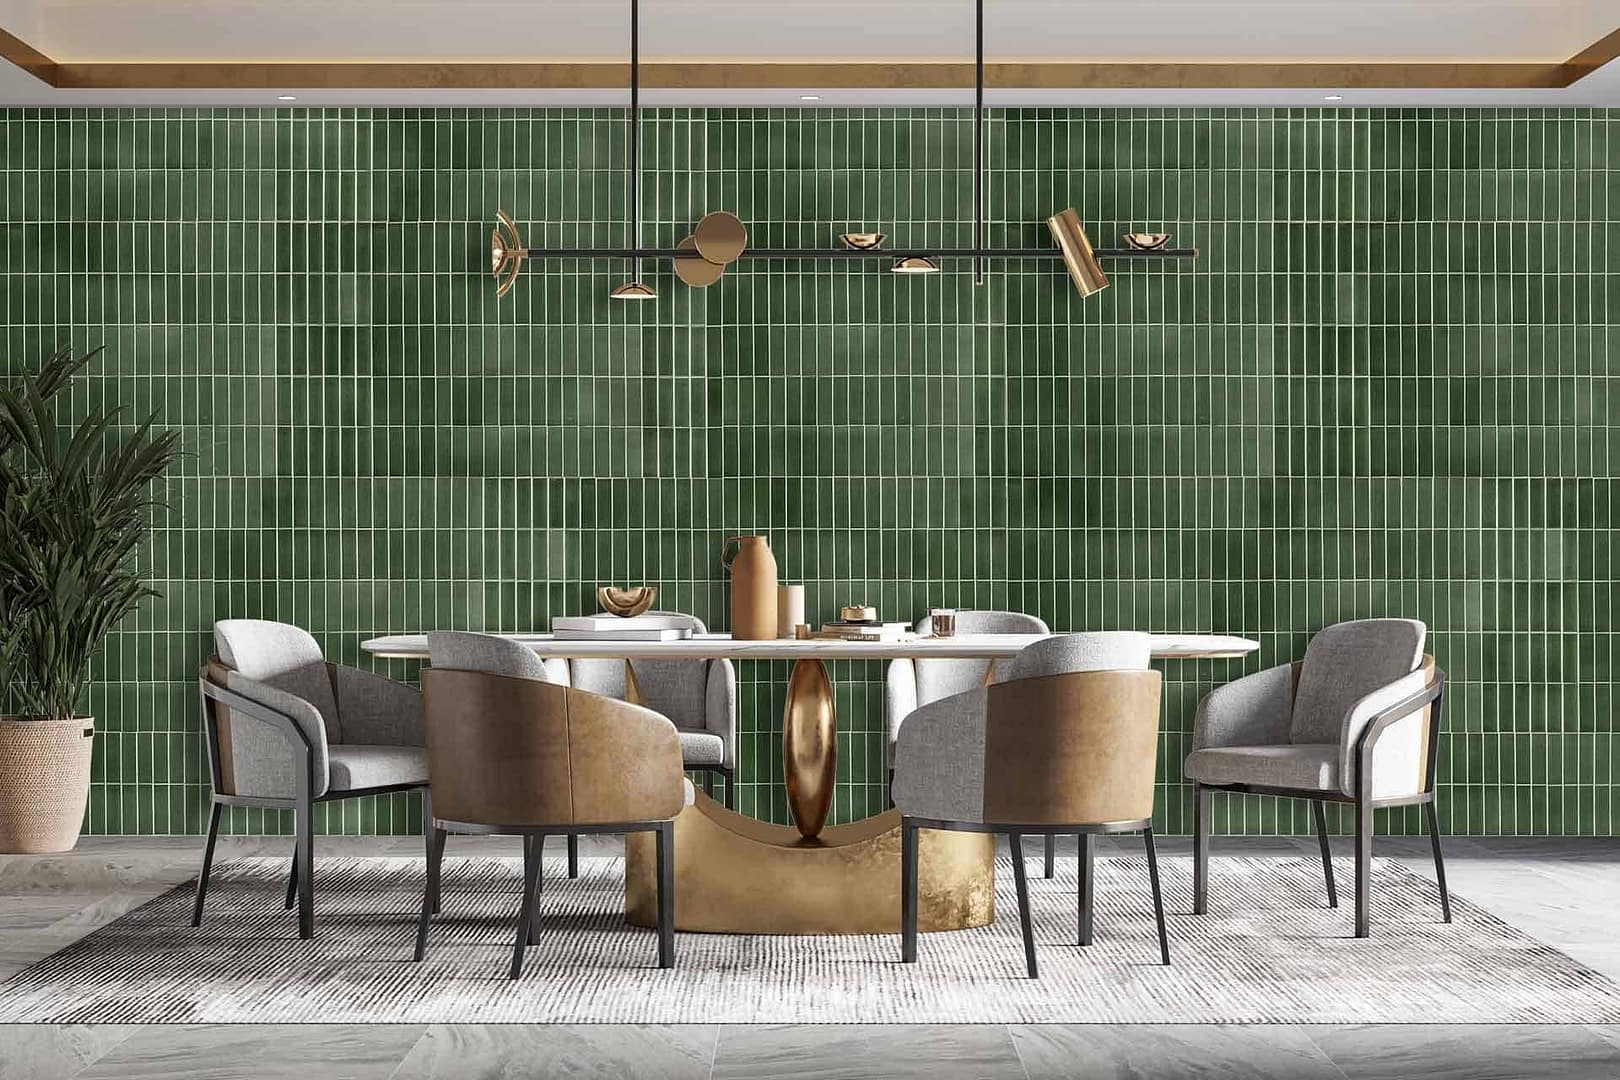 Golders Green - a wallpaper made up of emerald green rectangle tiles by Cara Saven Wall Design